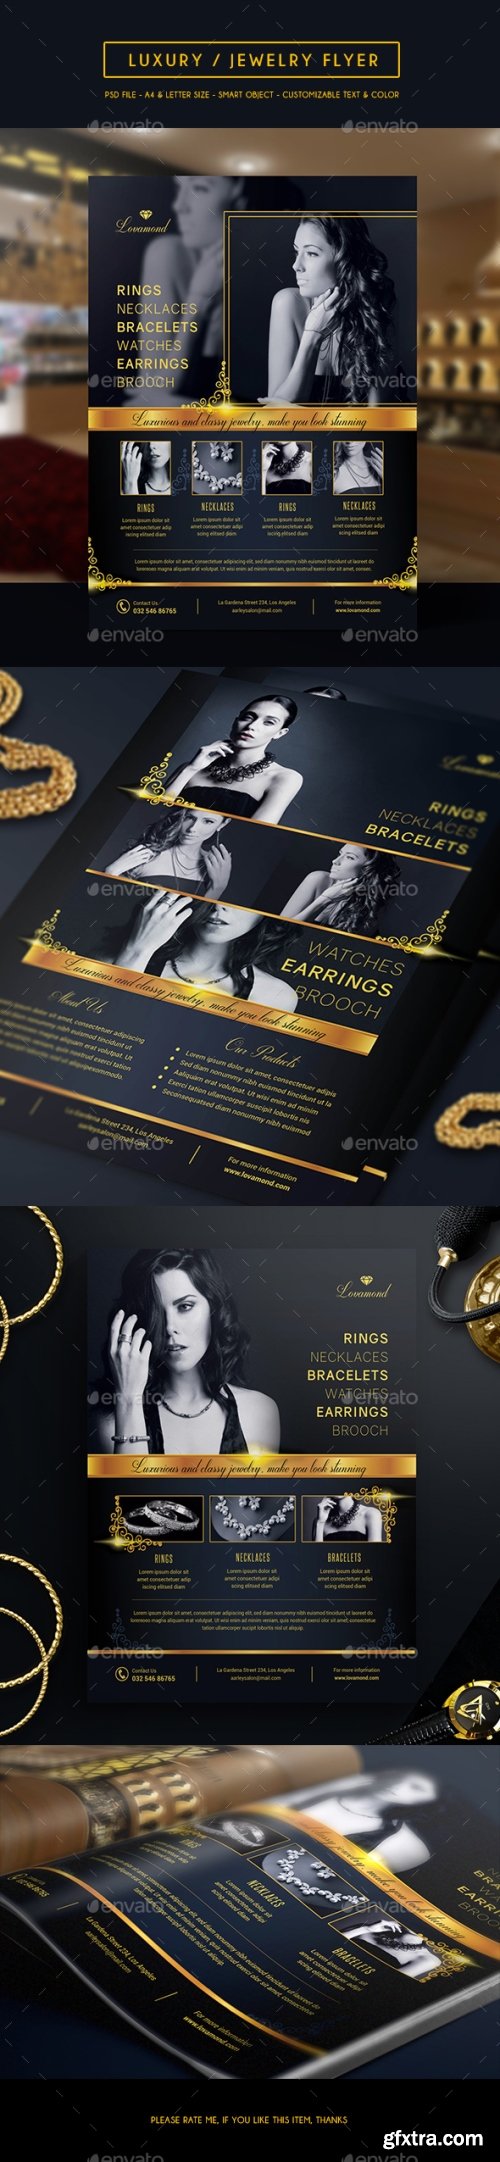 Graphicriver - Luxury/Jewelry Store Flyer 13928559